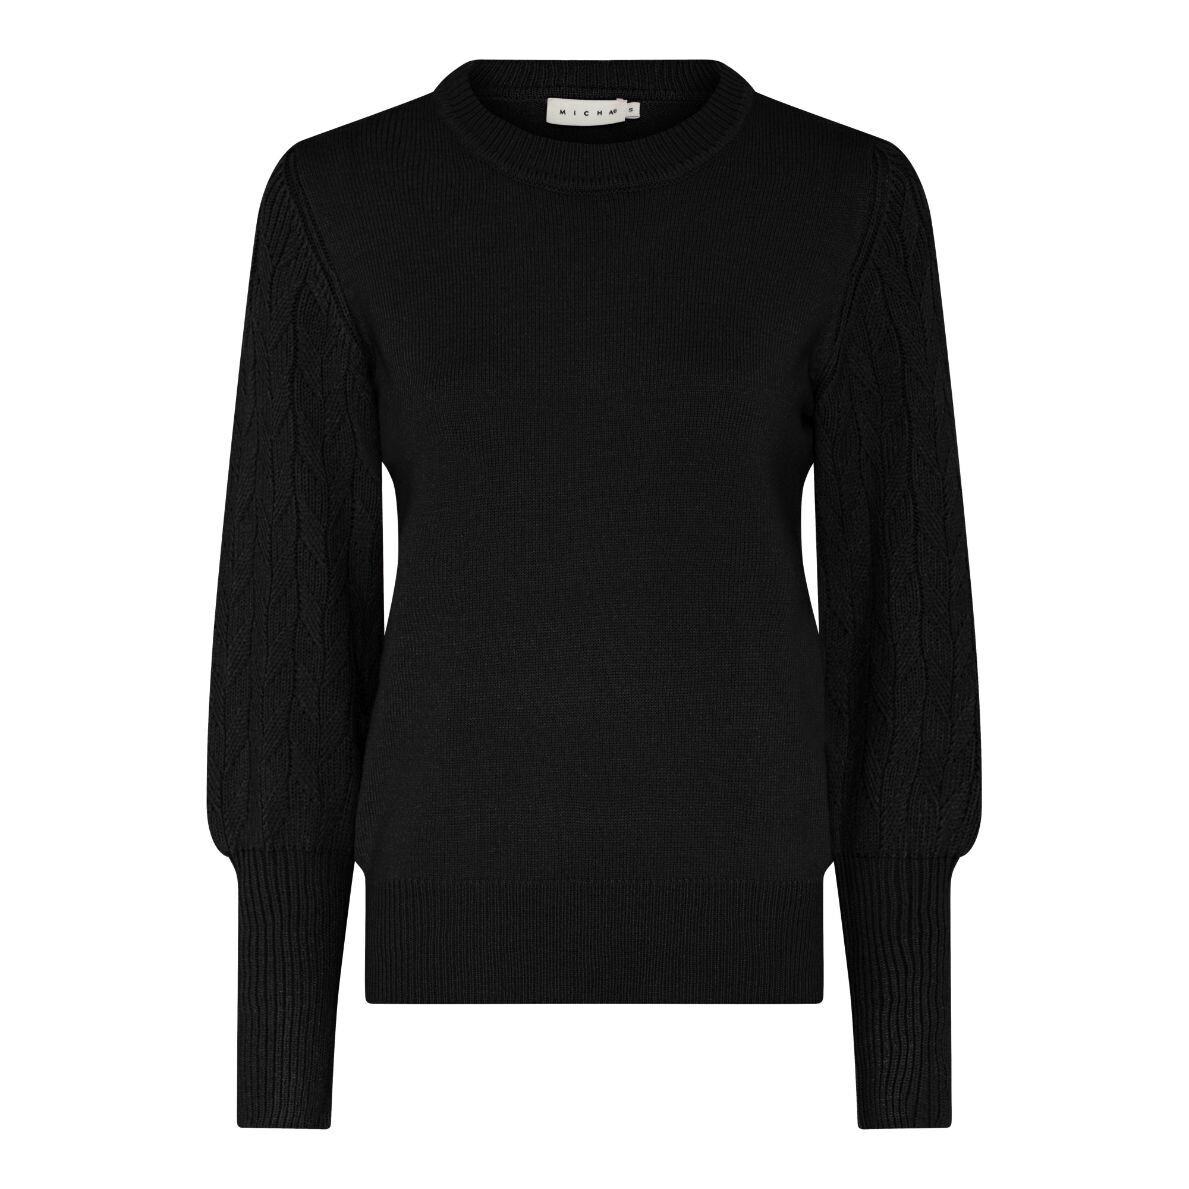 Micha trui zwart 172-185, Size: S